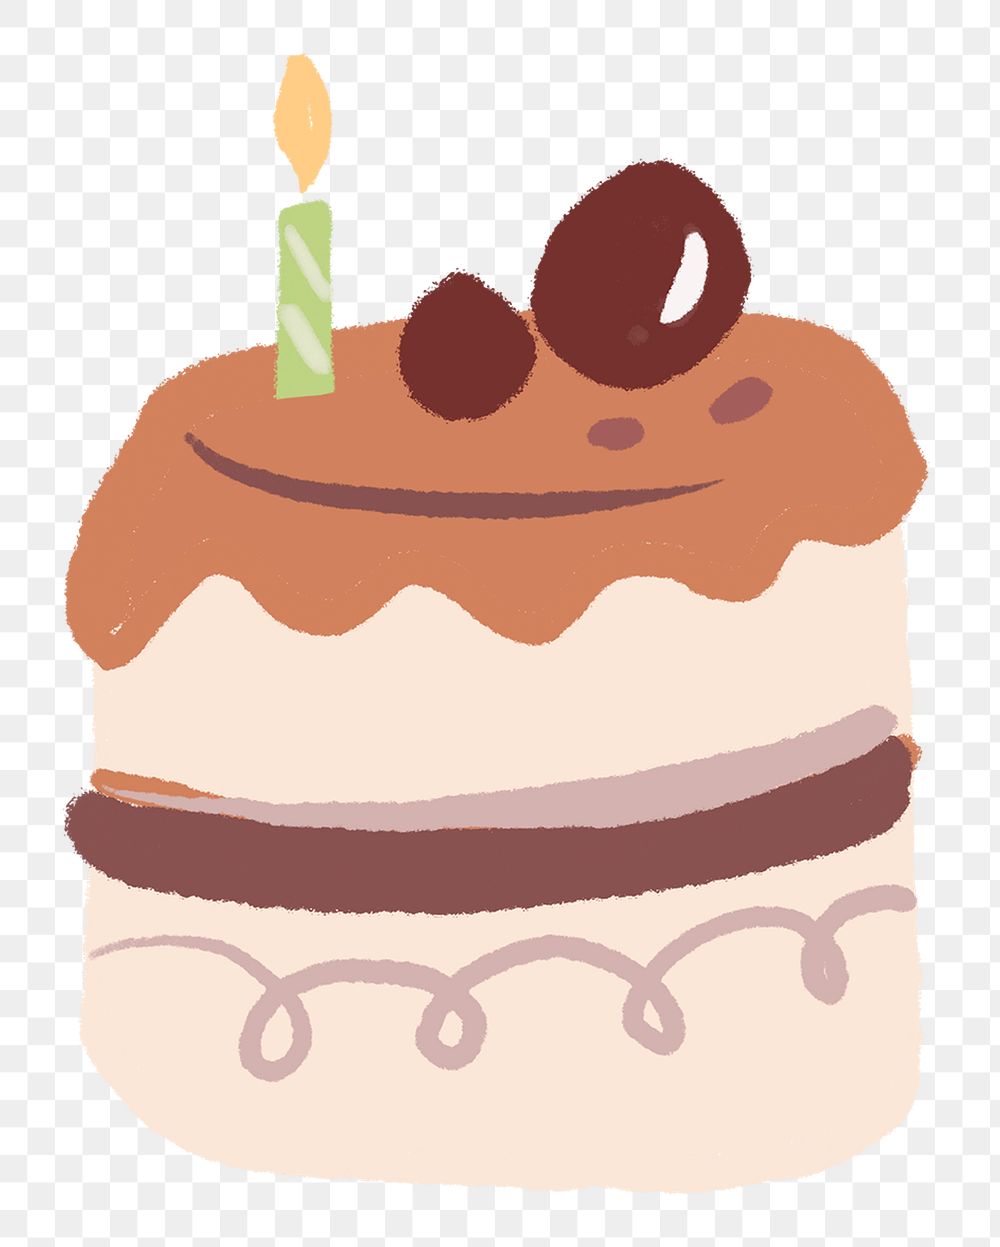 Chocolate cake PNG sticker, cute dessert icon